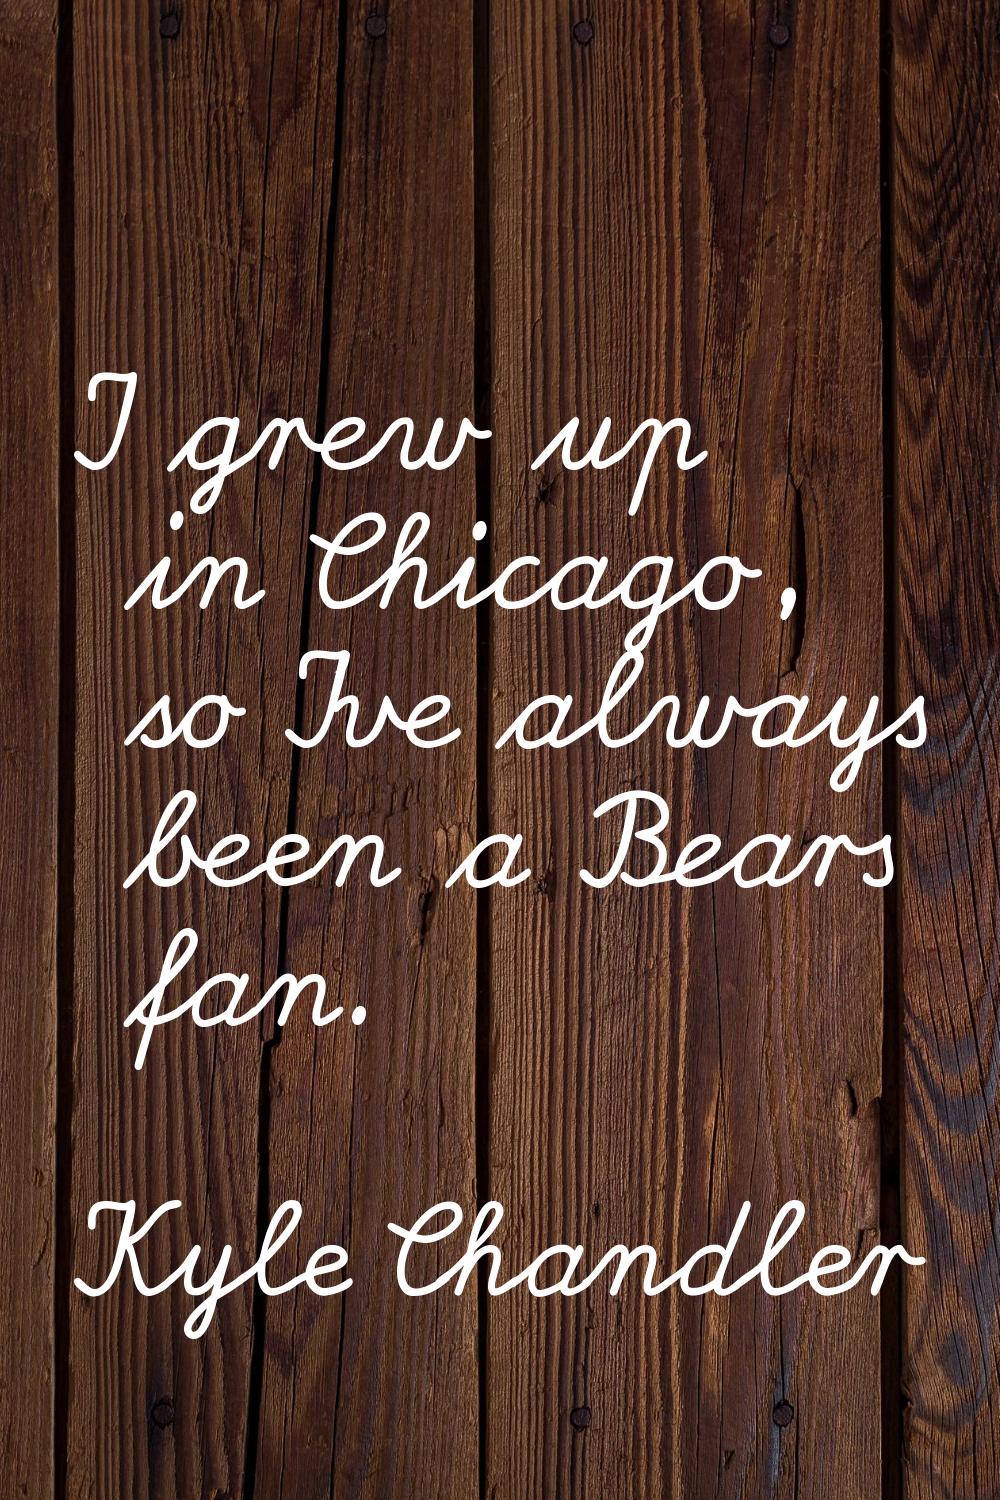 I grew up in Chicago, so I've always been a Bears fan.